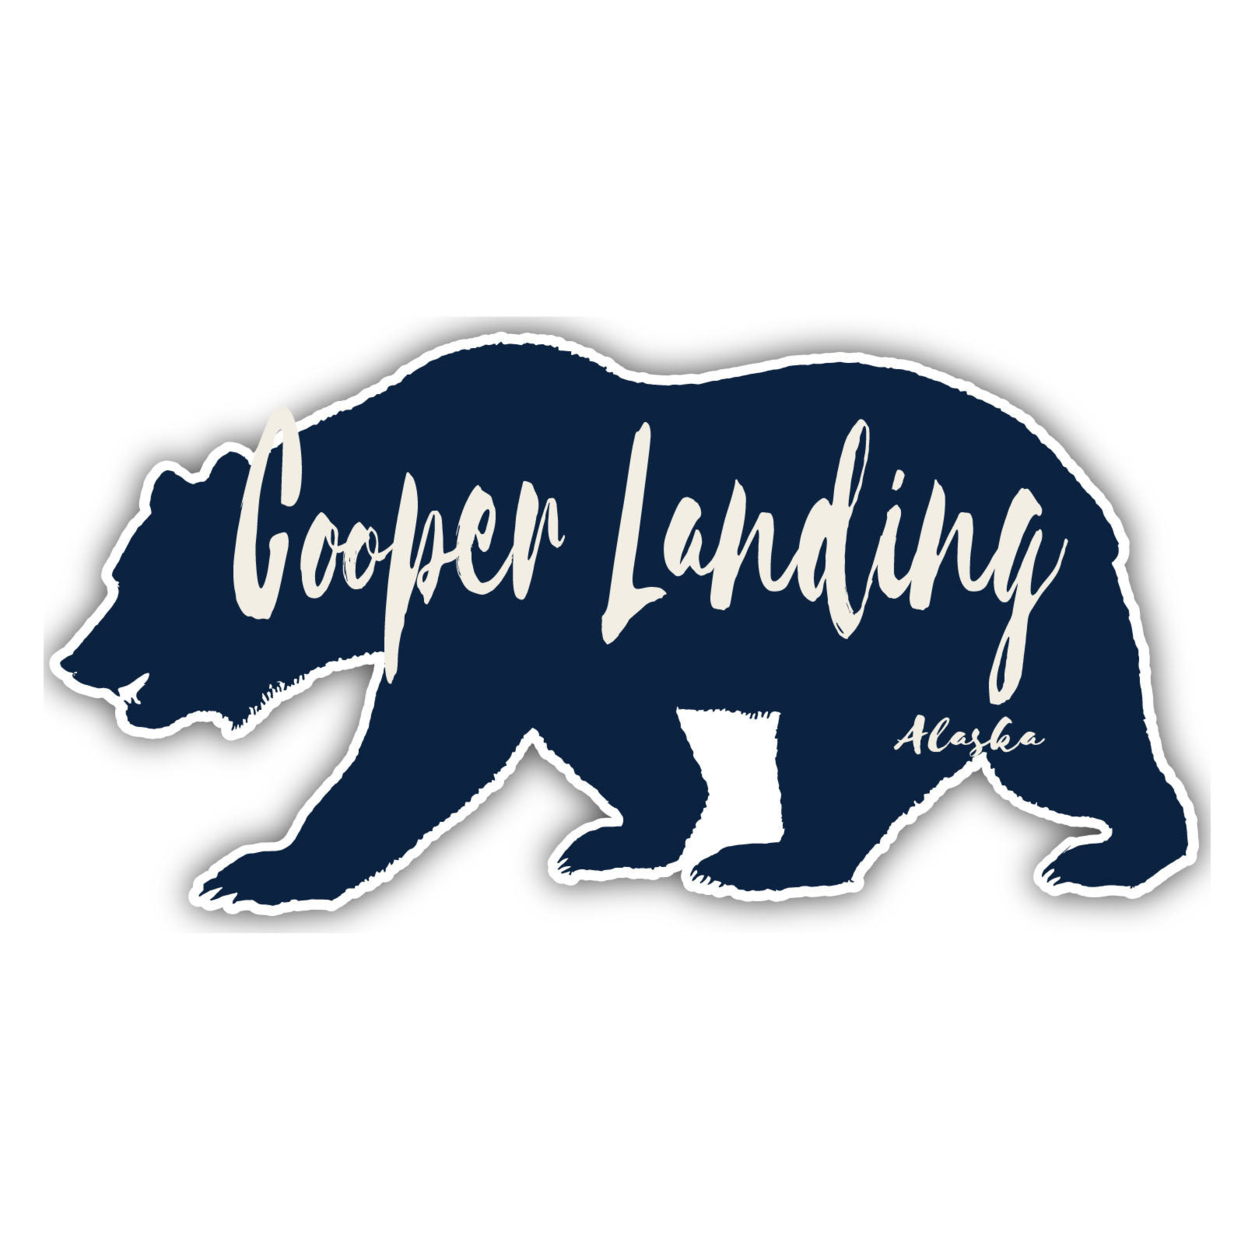 Cooper Landing Alaska Souvenir Decorative Stickers (Choose Theme And Size) - Single Unit, 8-Inch, Bear